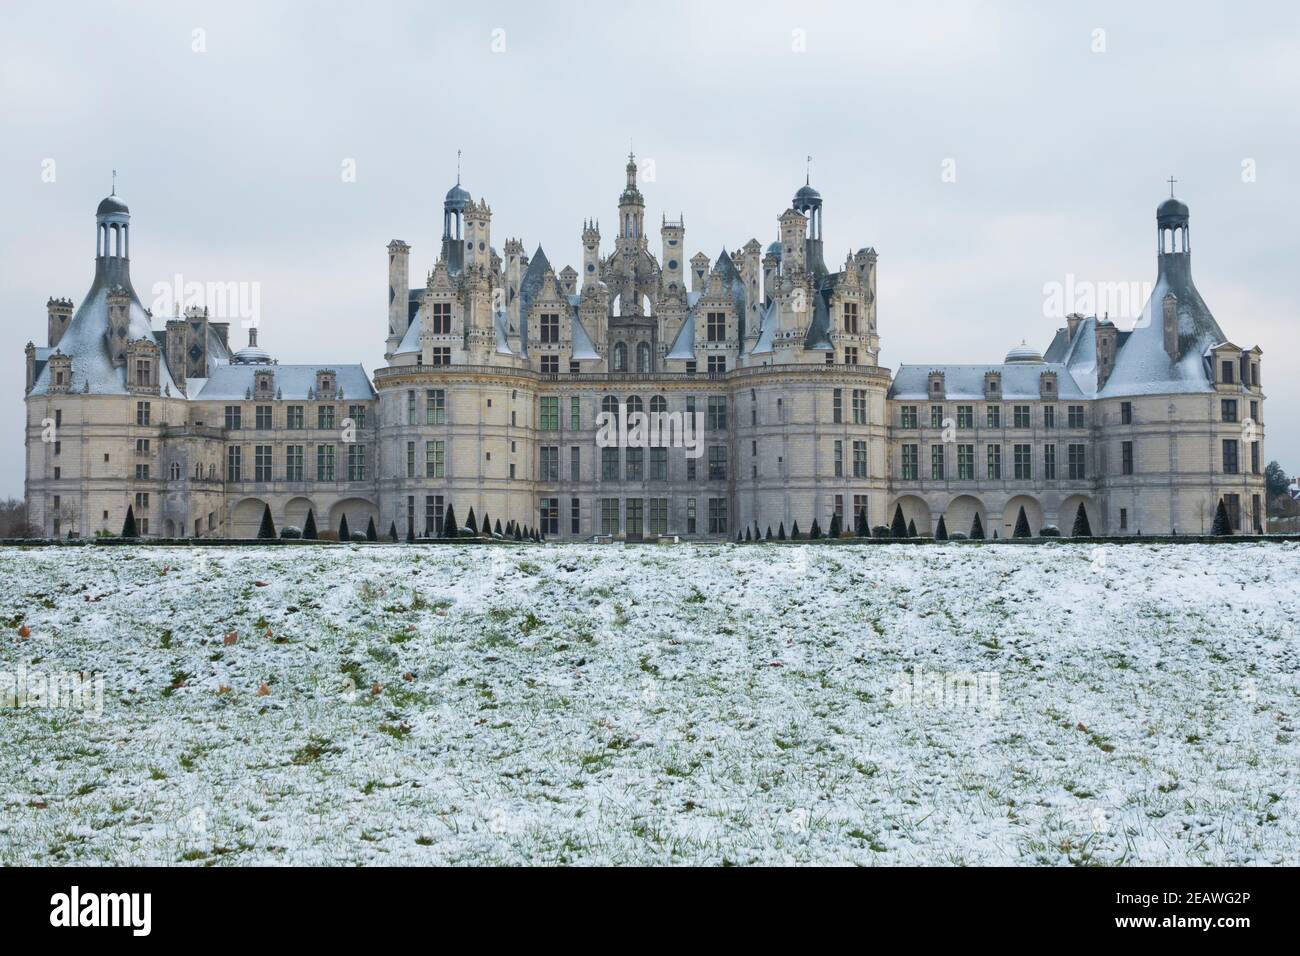 France, Loir-et-Cher (41), Chambord (UNESCO World Heritage), royal castle of the Renaissance, after the snowfall Stock Photo